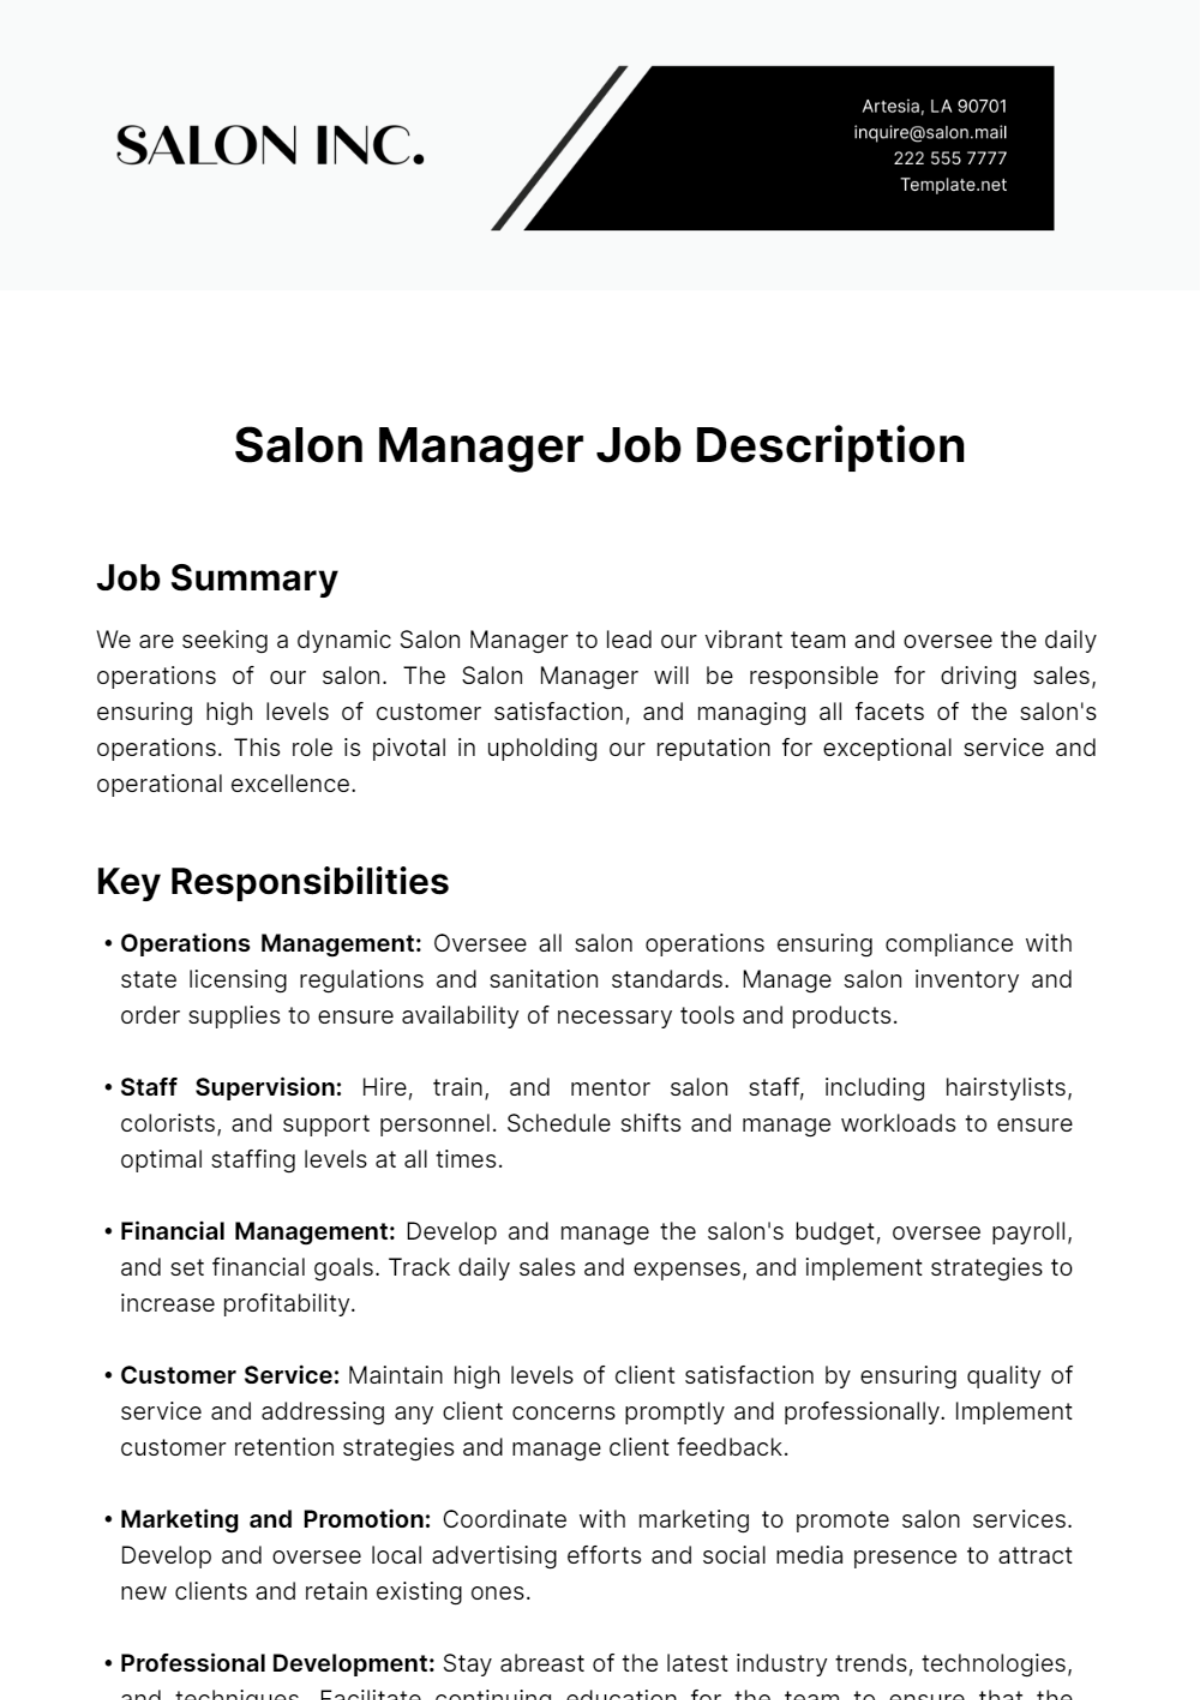 Free Salon Manager Job Description Template